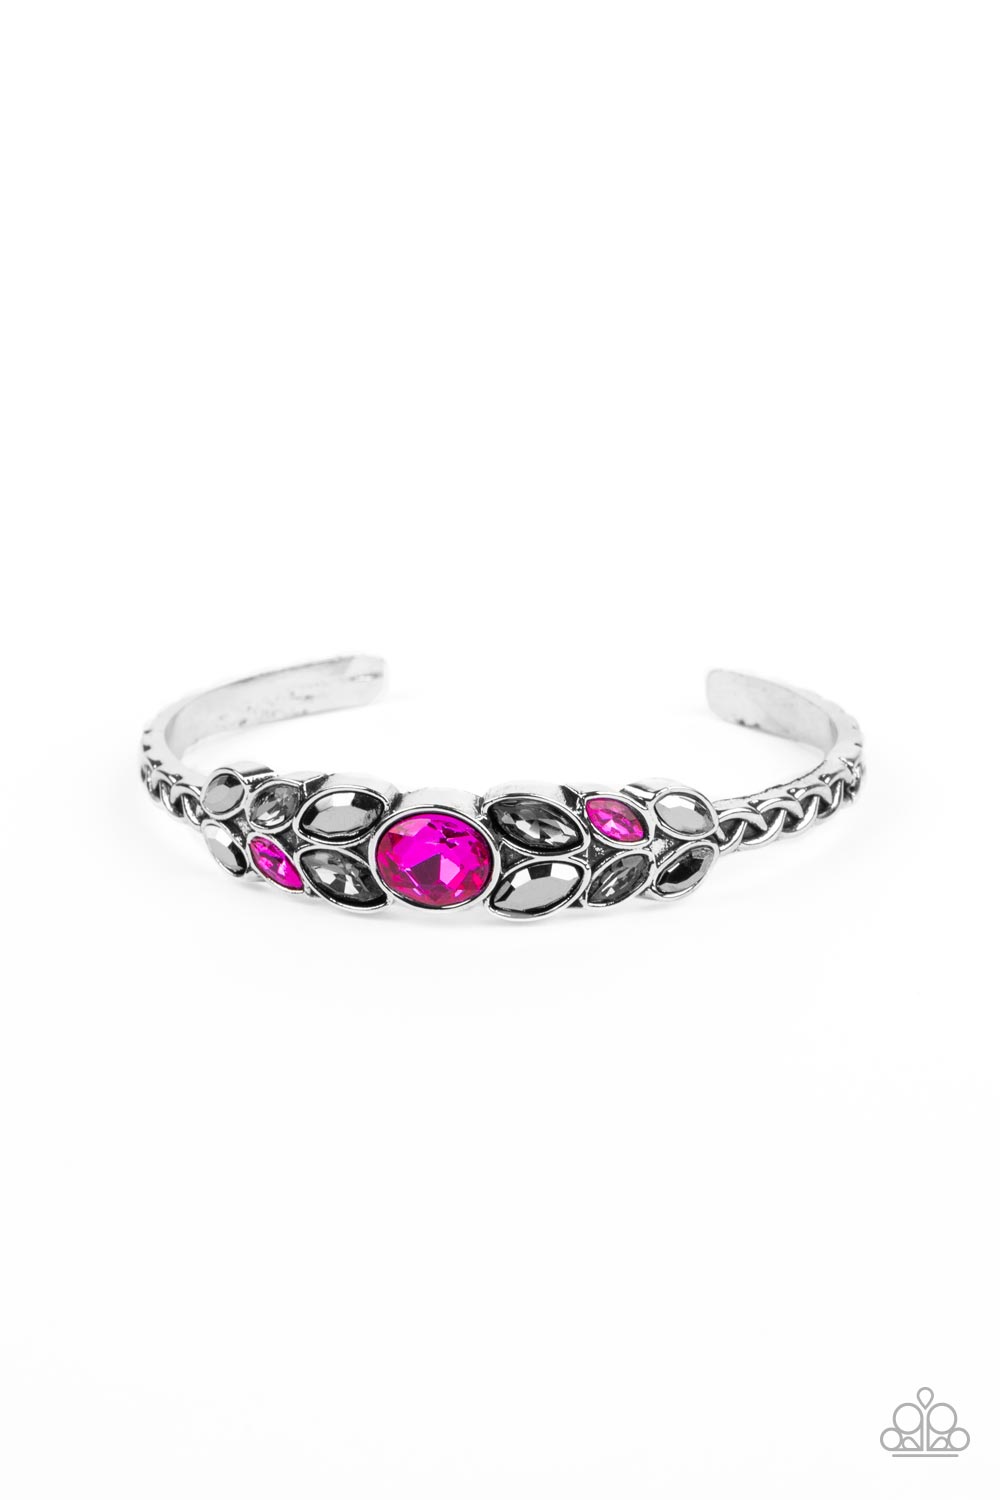 Vogue Vineyard Hot Pink Rhinestone Cuff Bracelet - Paparazzi Accessories- lightbox - CarasShop.com - $5 Jewelry by Cara Jewels